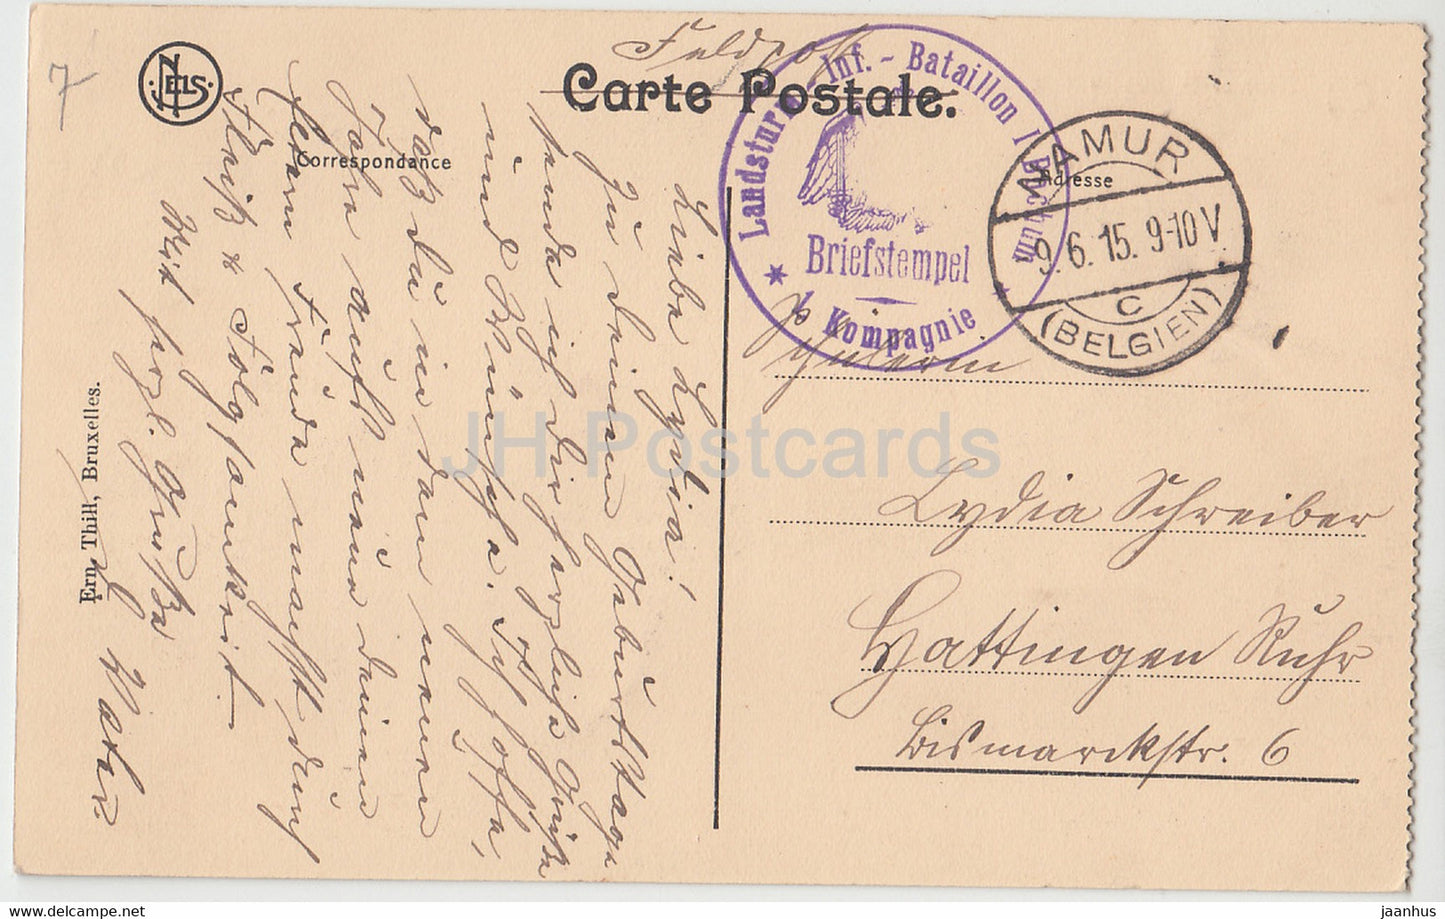 Namur - Citadelle - Le Parc - Landsturm Inf Bataillon I Bochum - Feldpost - alte Postkarte - 1915 - Belgien - gebraucht